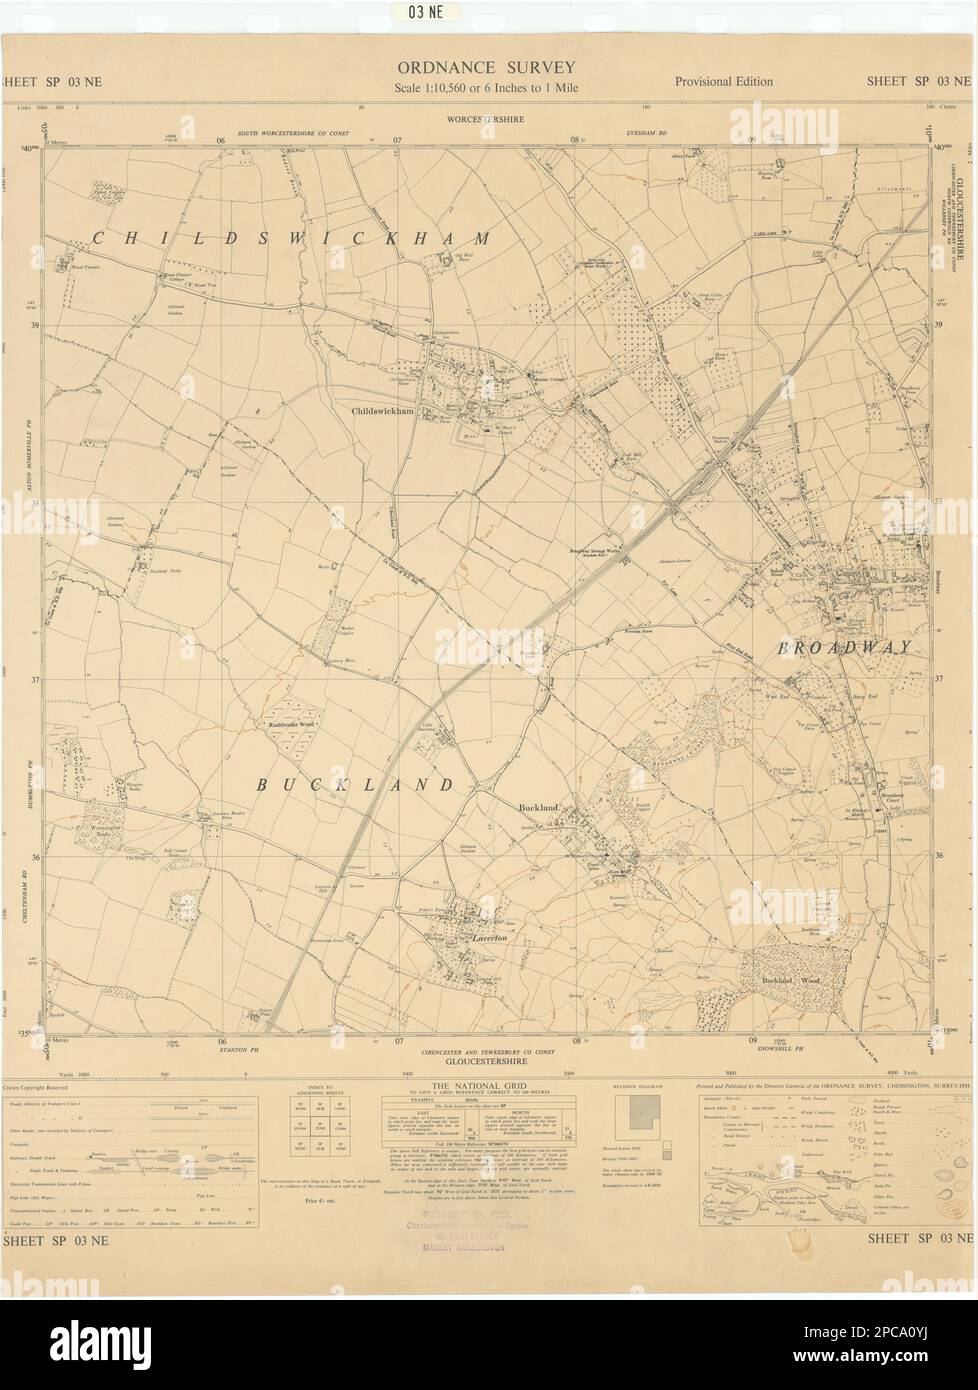 Ordnance Survey SP03NE Cotswolds Broadway Childswickham Buckland 1955 map Stock Photo